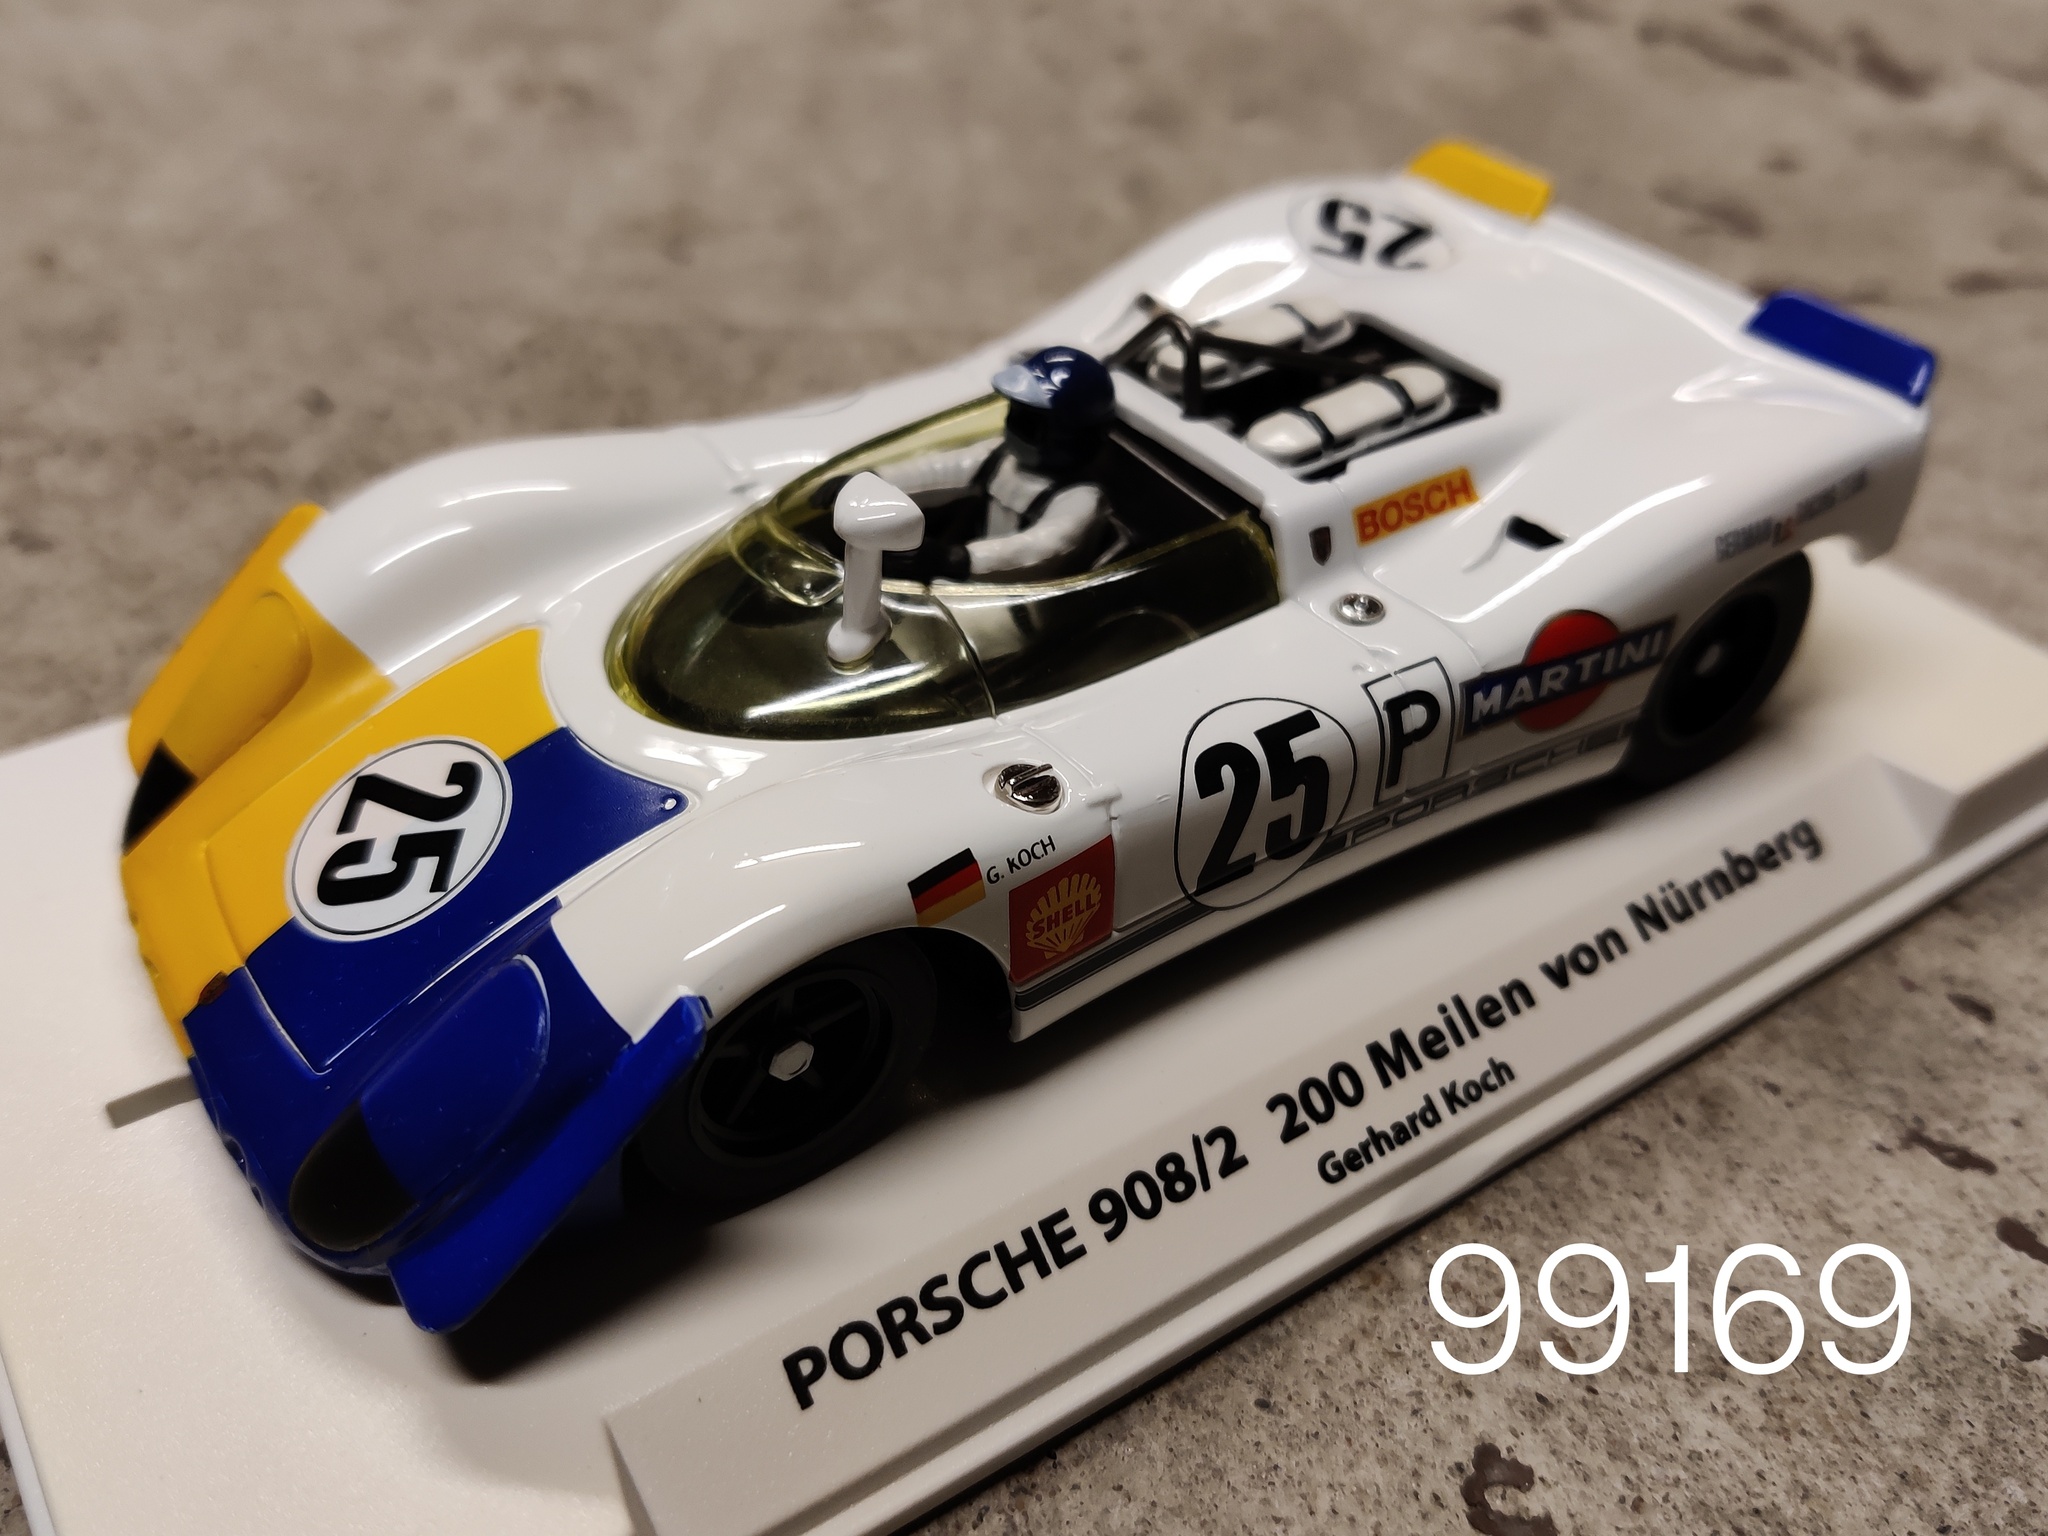 FLY Car Model - Porsche 908/2 - 200 meilen von Nurnberg 1969 - limited edition 500 units (750 SEK) I LAGER / IN STOCK